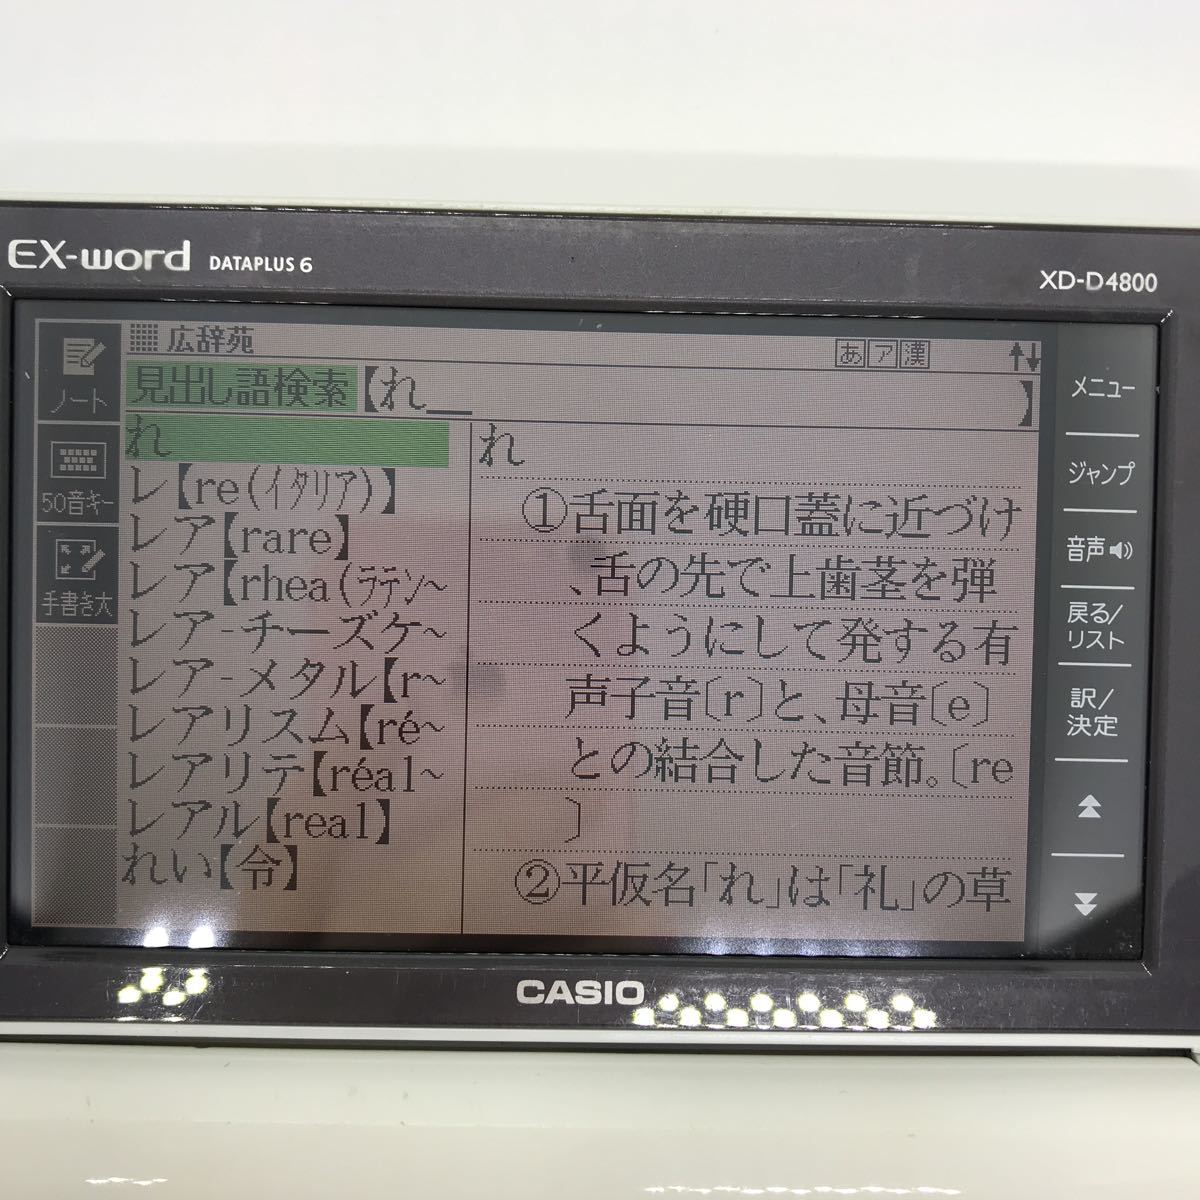 CASIO EX-word DATAPLUS6 XD-D4800 カシオ電子辞書 d85l295tn｜Yahoo